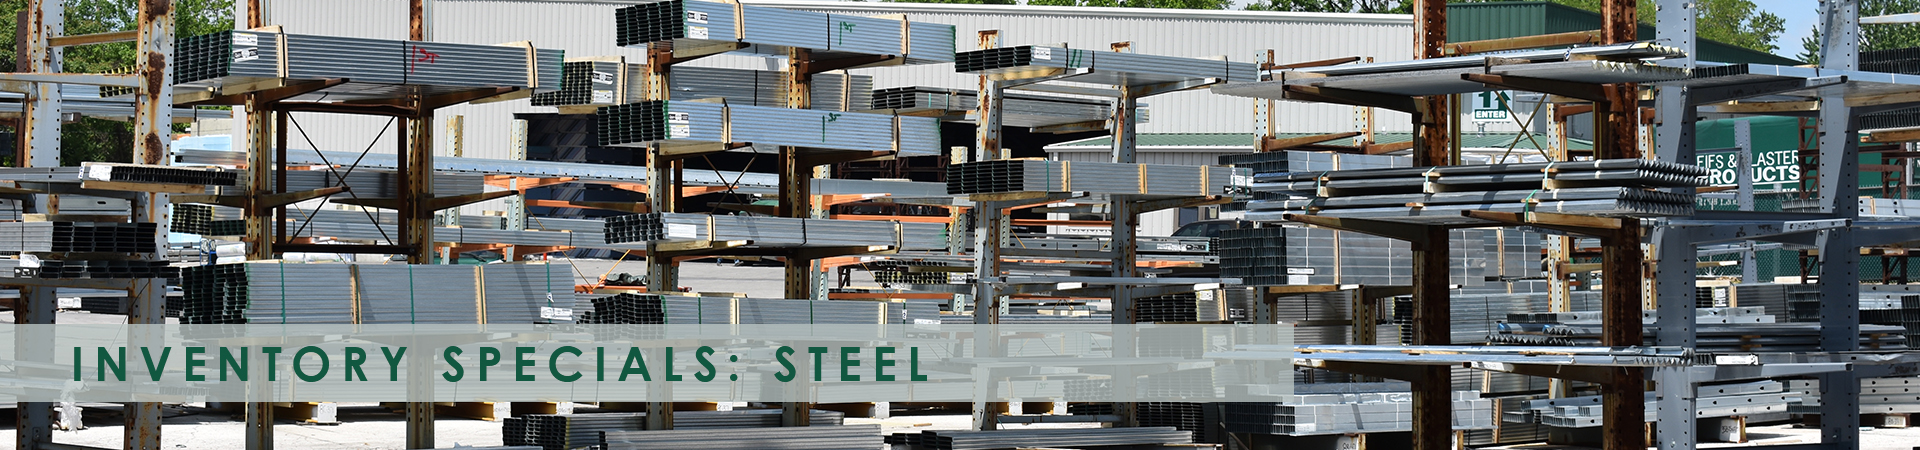 steel inventory specials